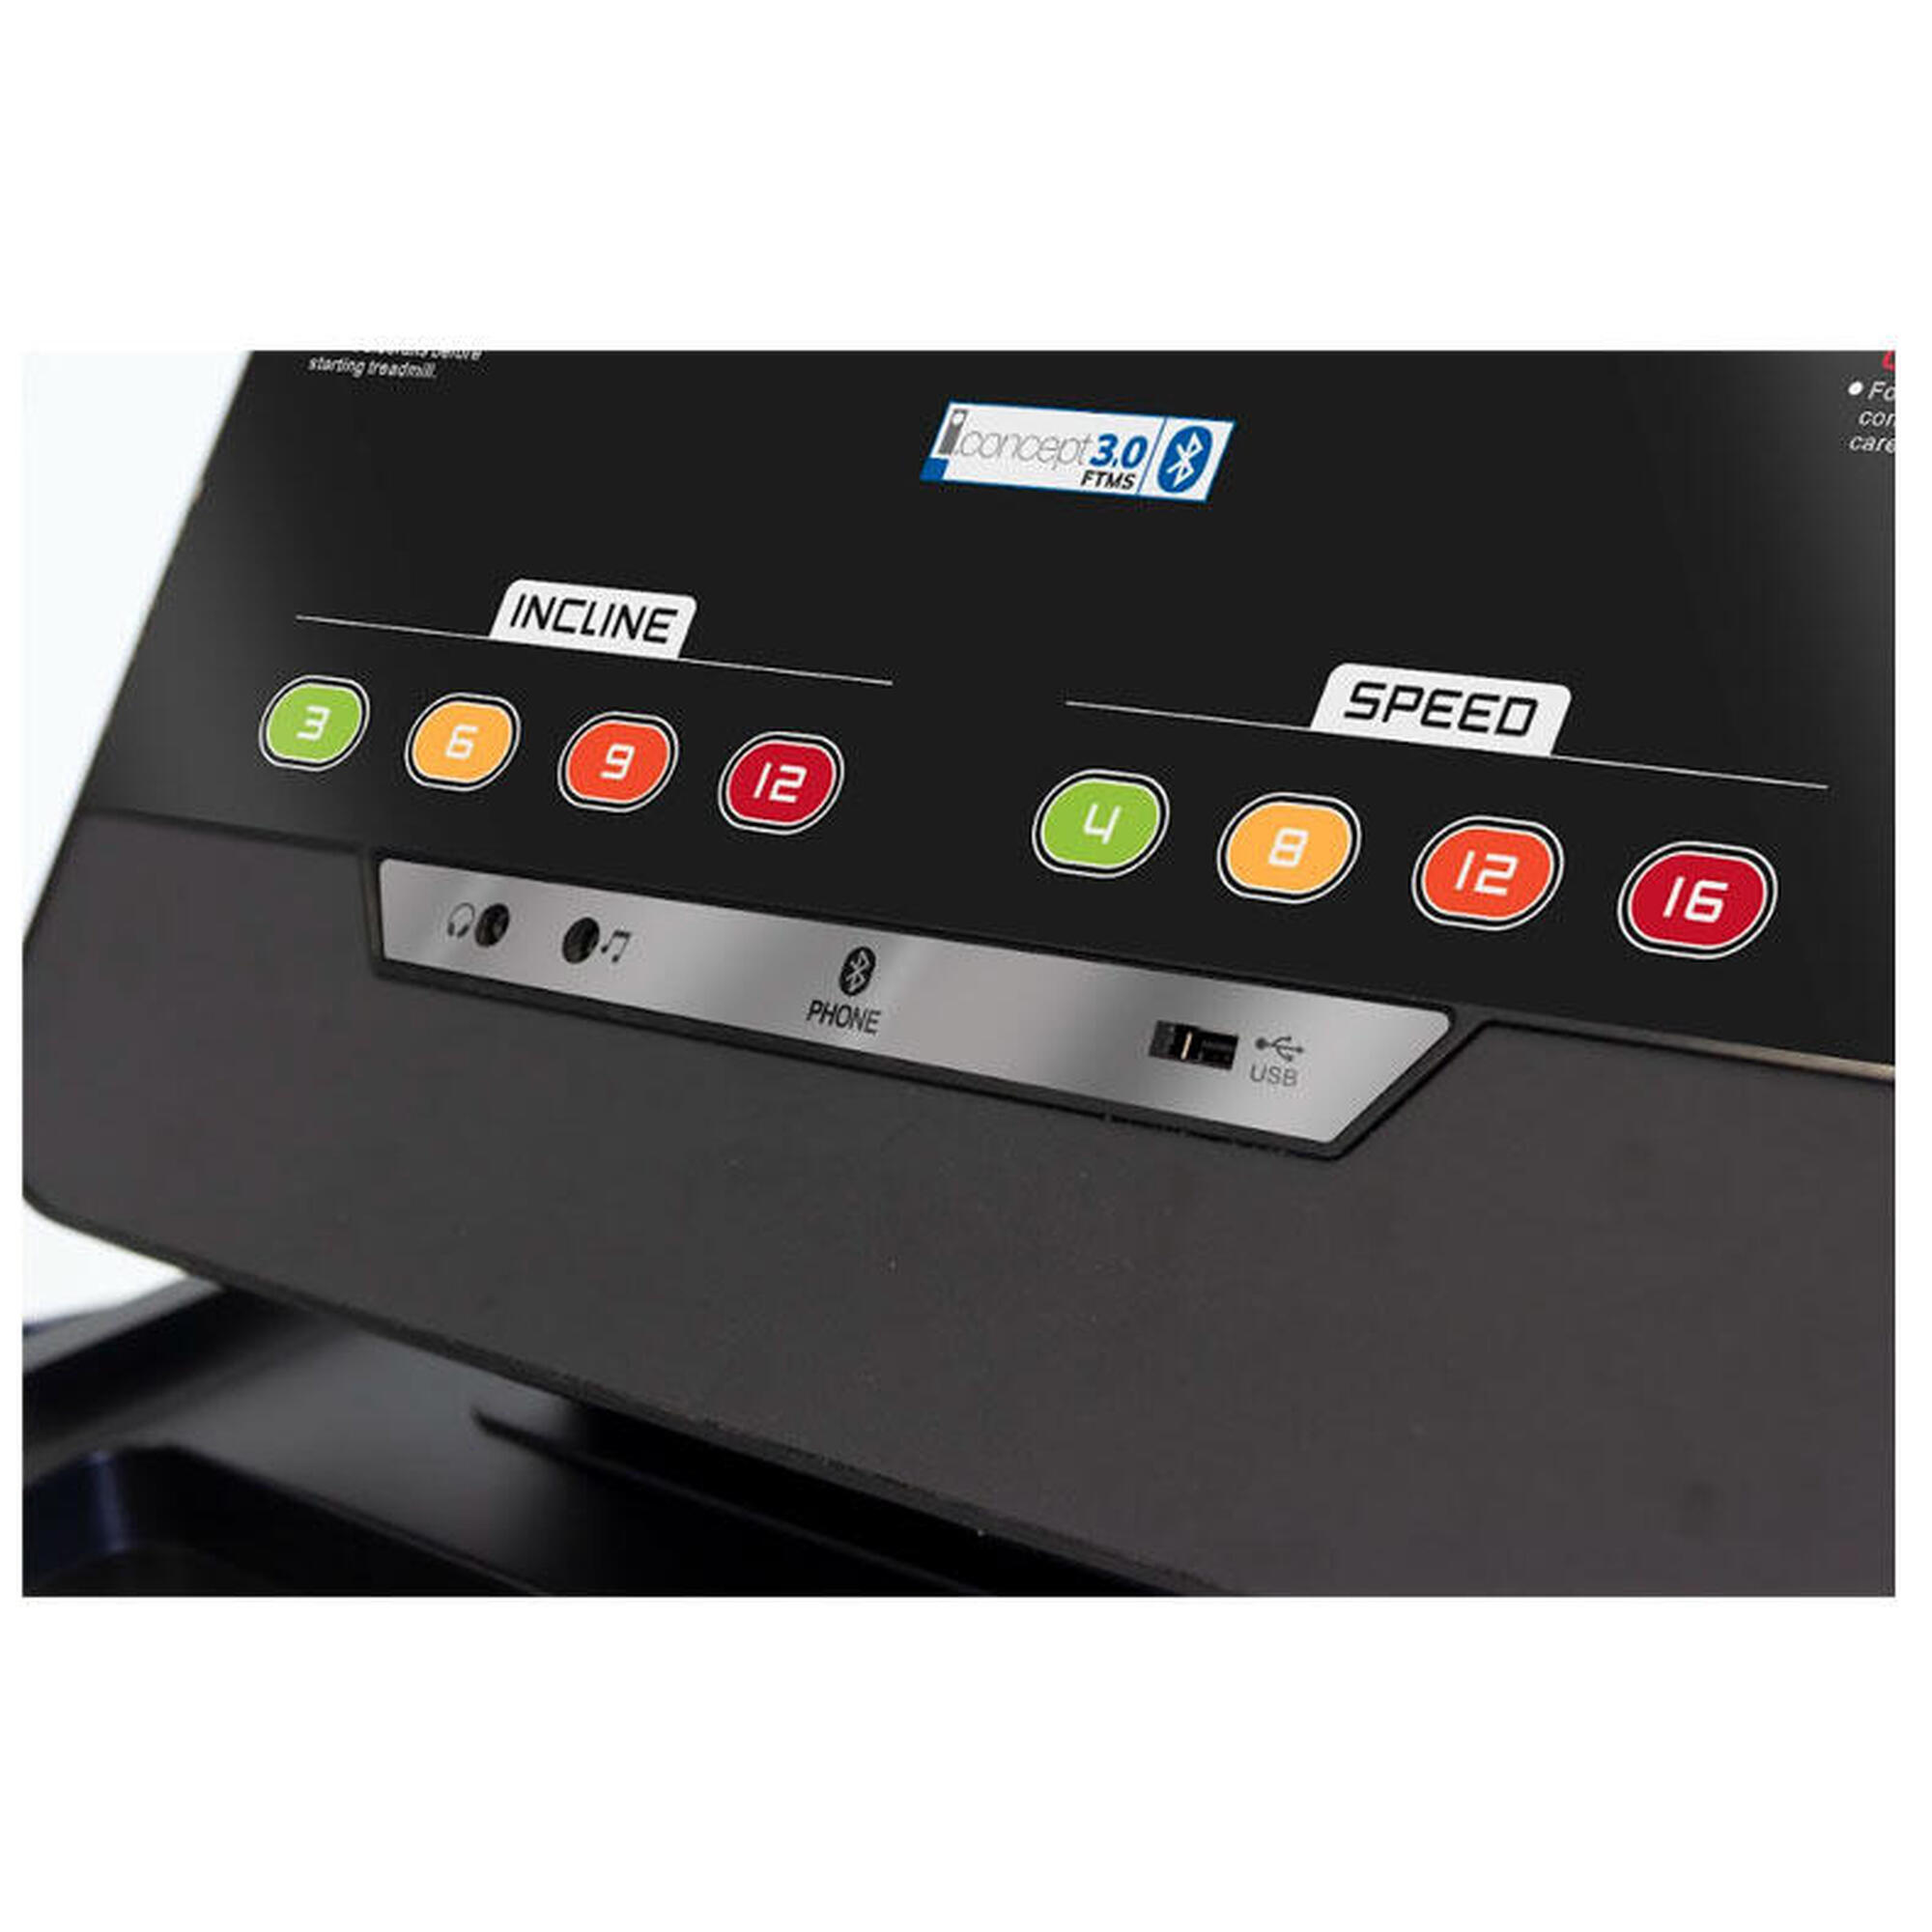 Tapis de course - Boxster II - Kinomap,Zwift - 20km/h - 150x51cm - LCD